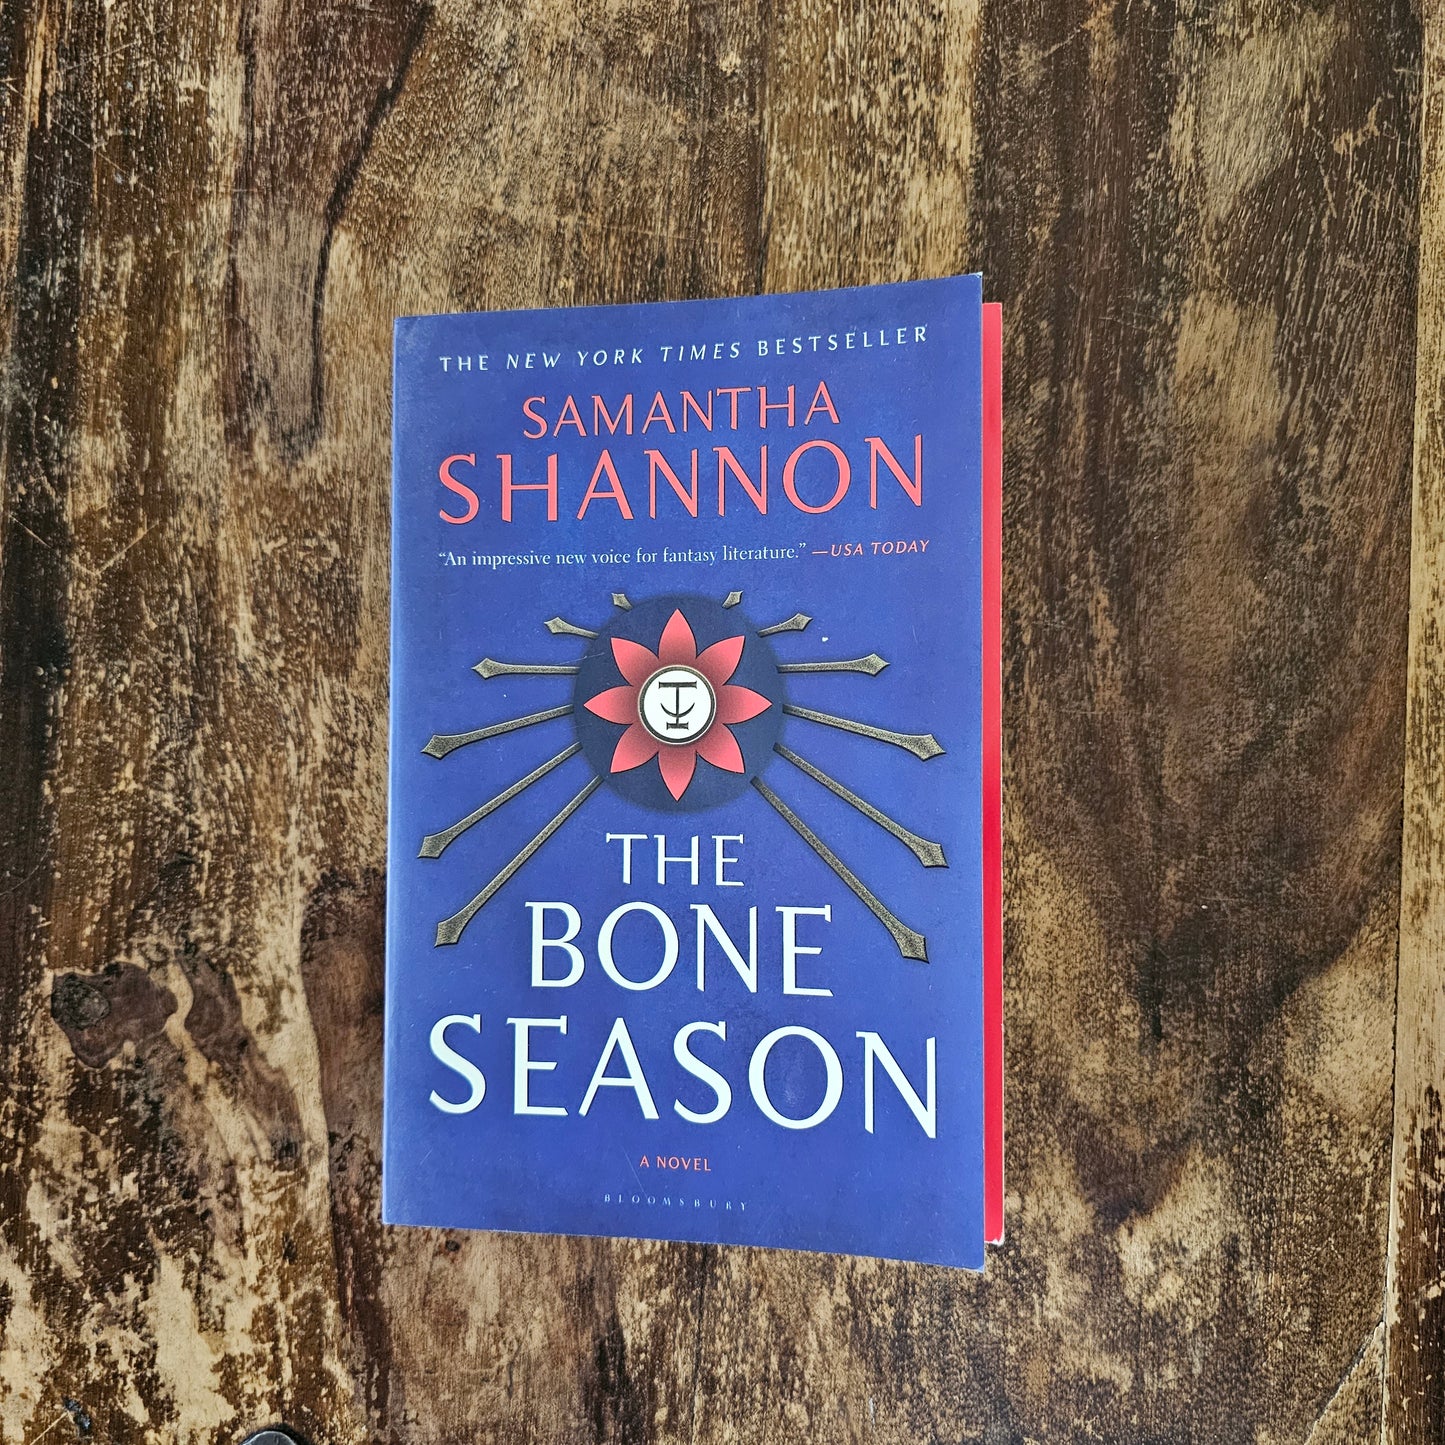 The Bone Season series